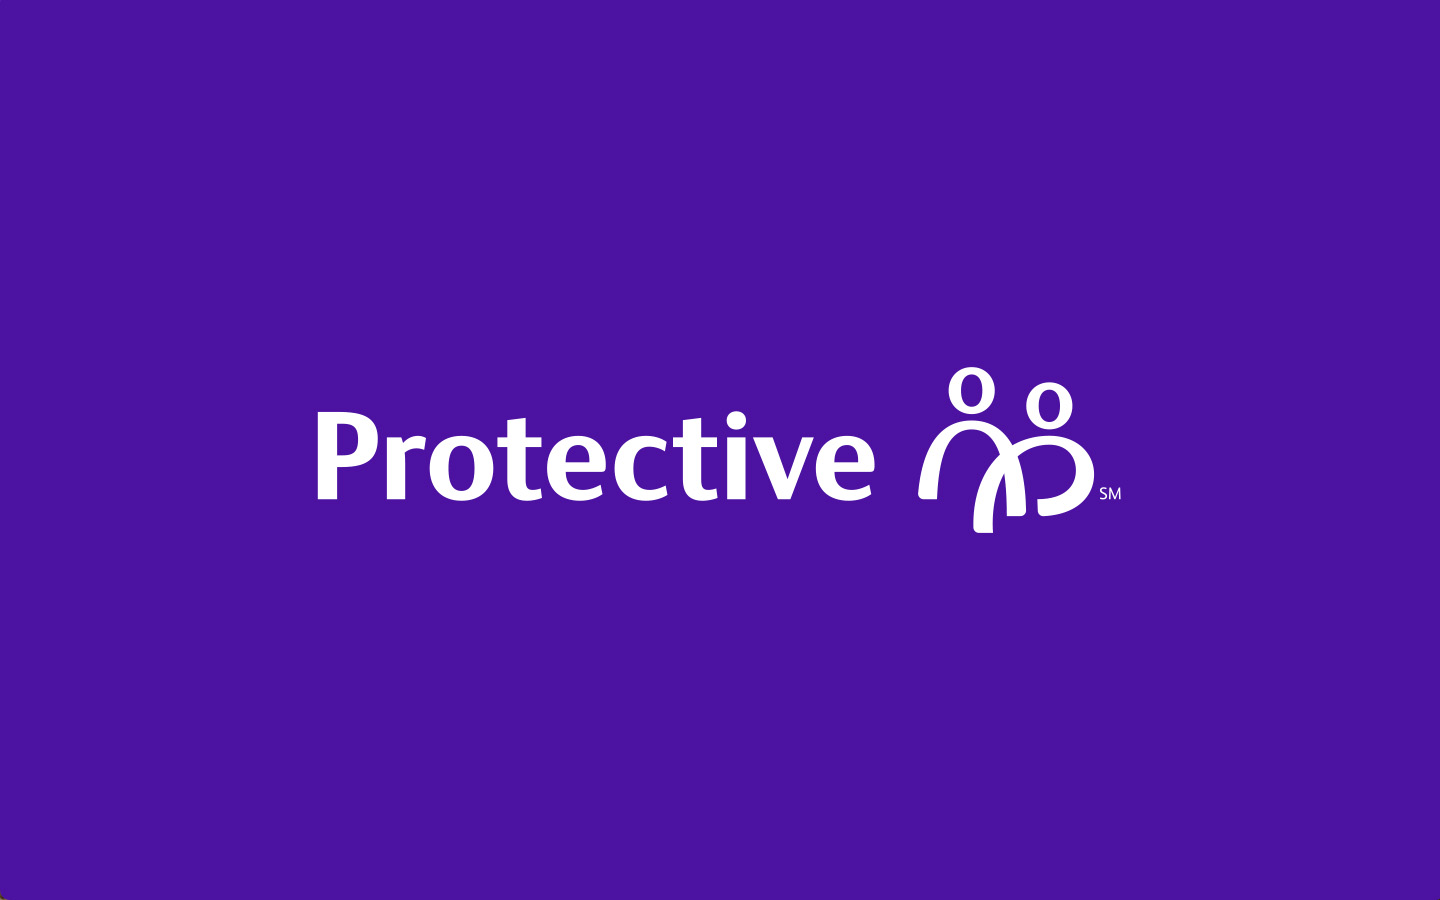 Protective Life Banner Image